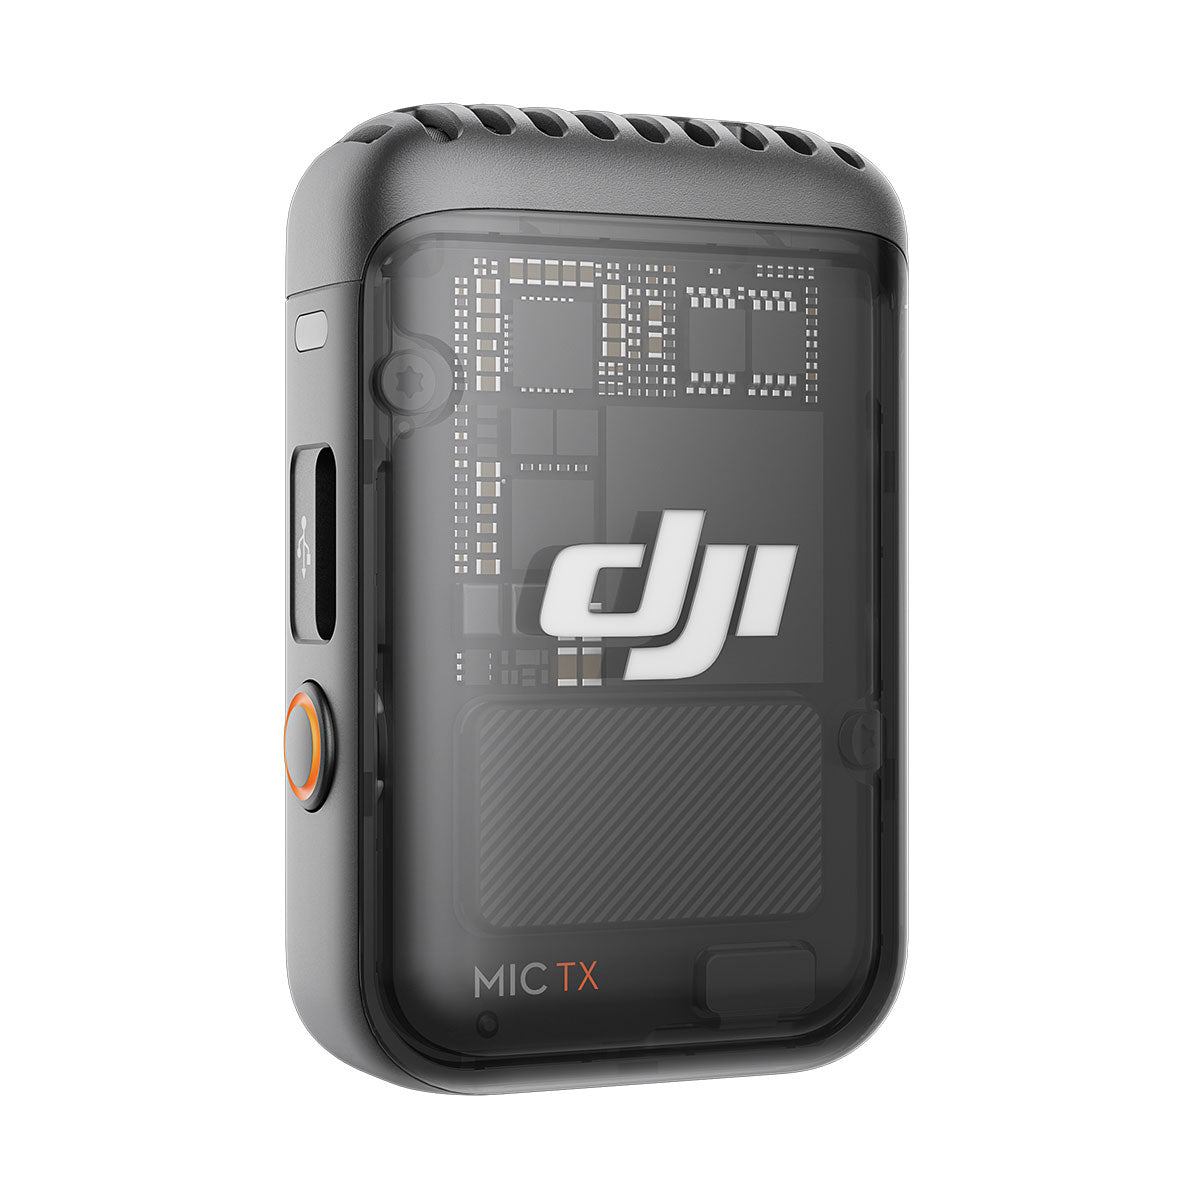 DJI Mic 2 Compact Digital Wireless Microphone CP.RN.00000327.01